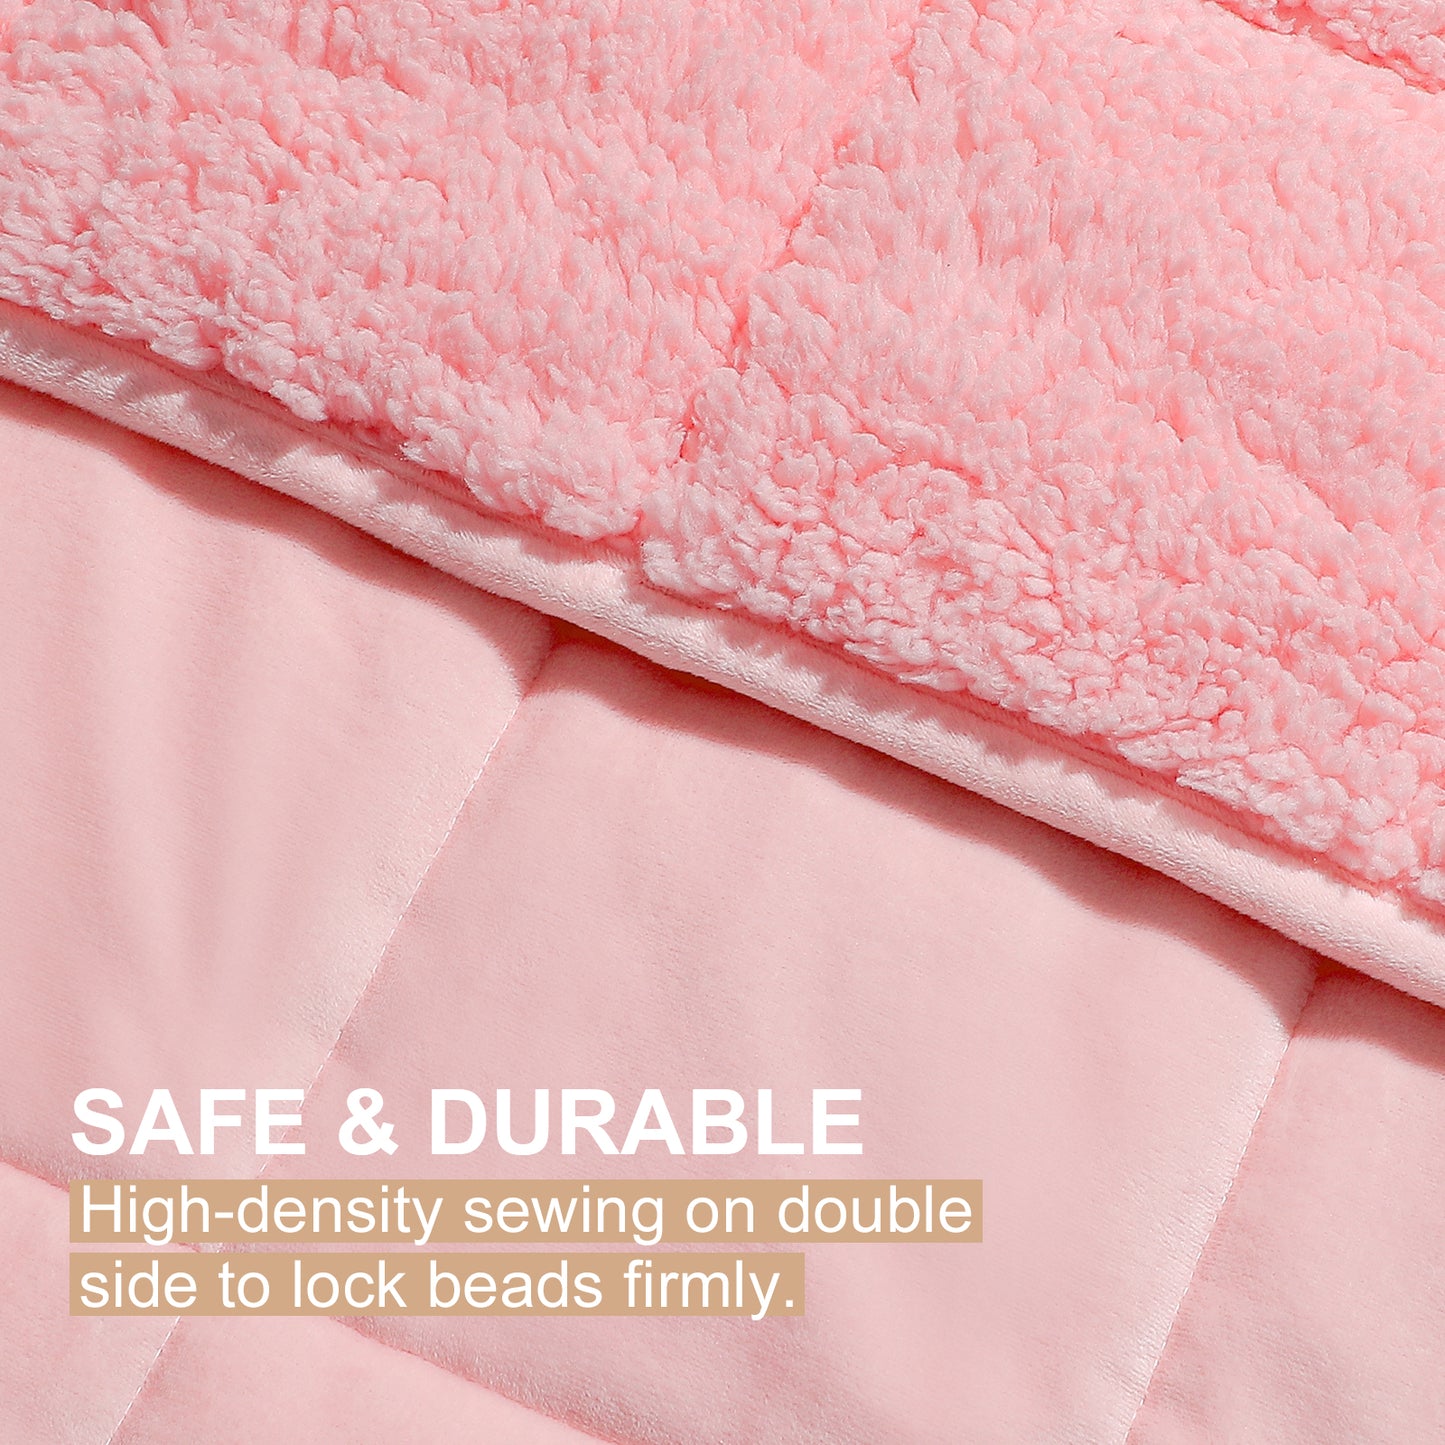 Argstar Sherpa Fleece Weighted Blanket Pink